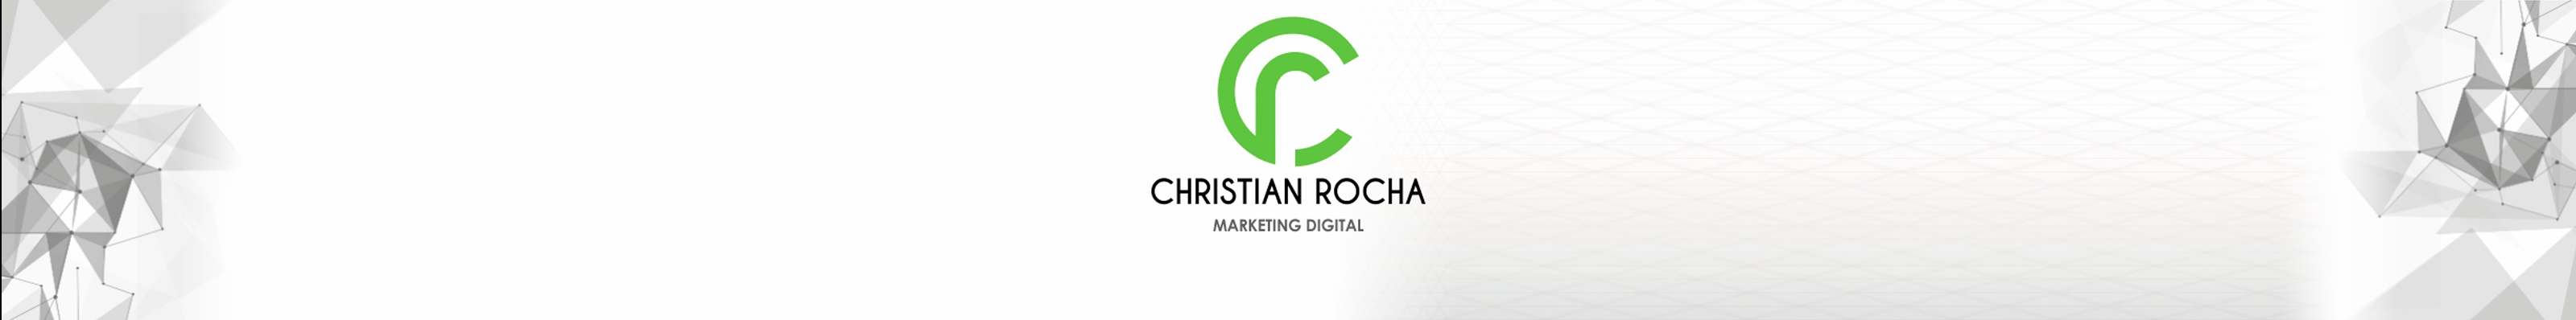 Baner profilu użytkownika Christian Rocha